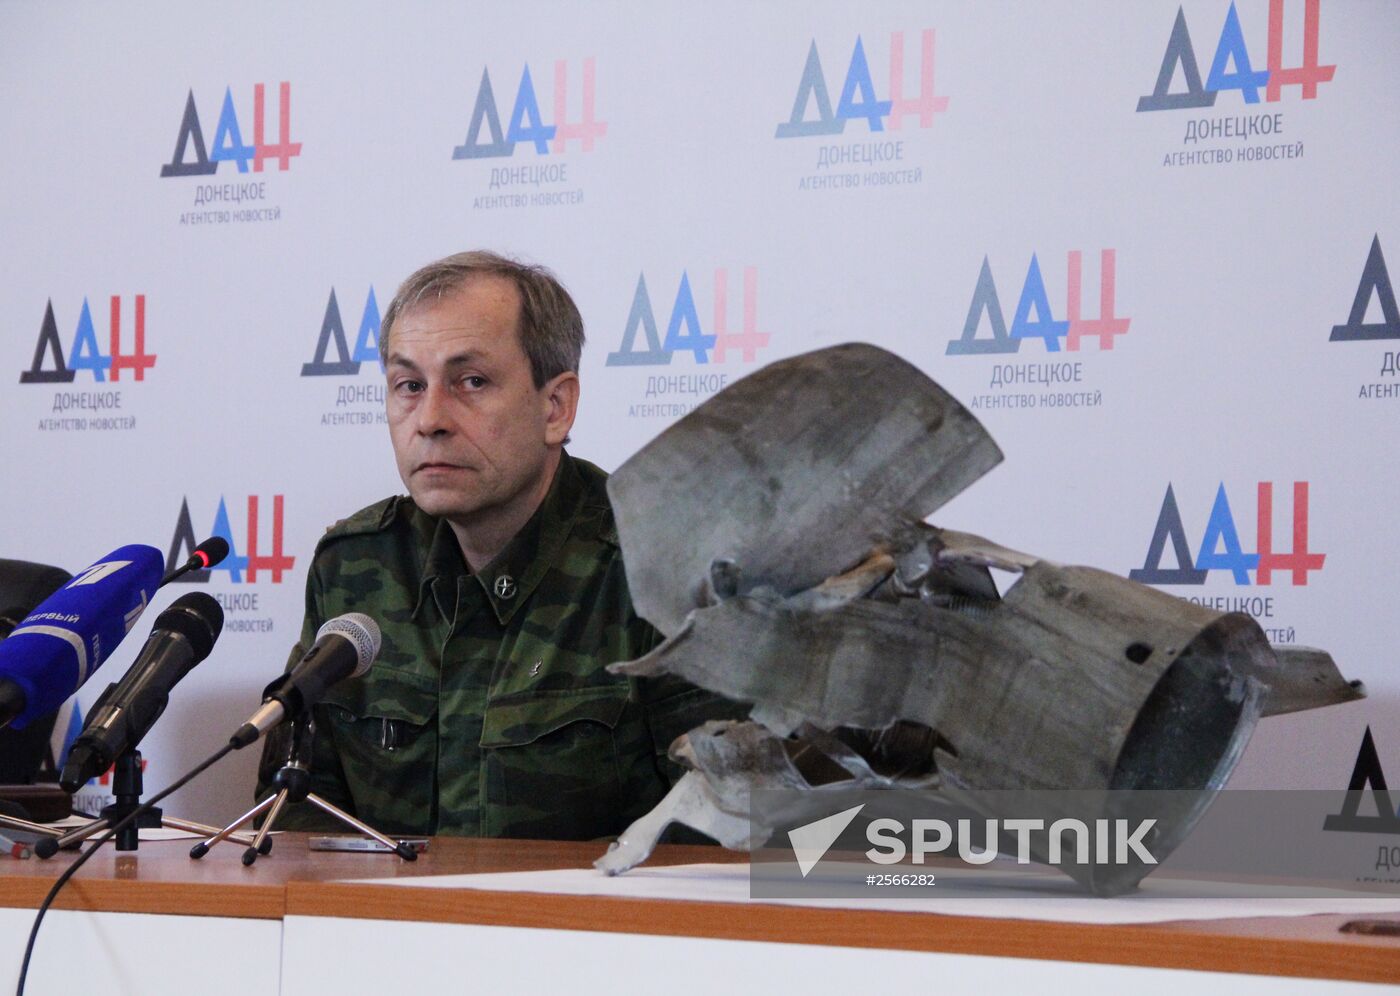 Eduard Basurin gives news conference in Donetsk